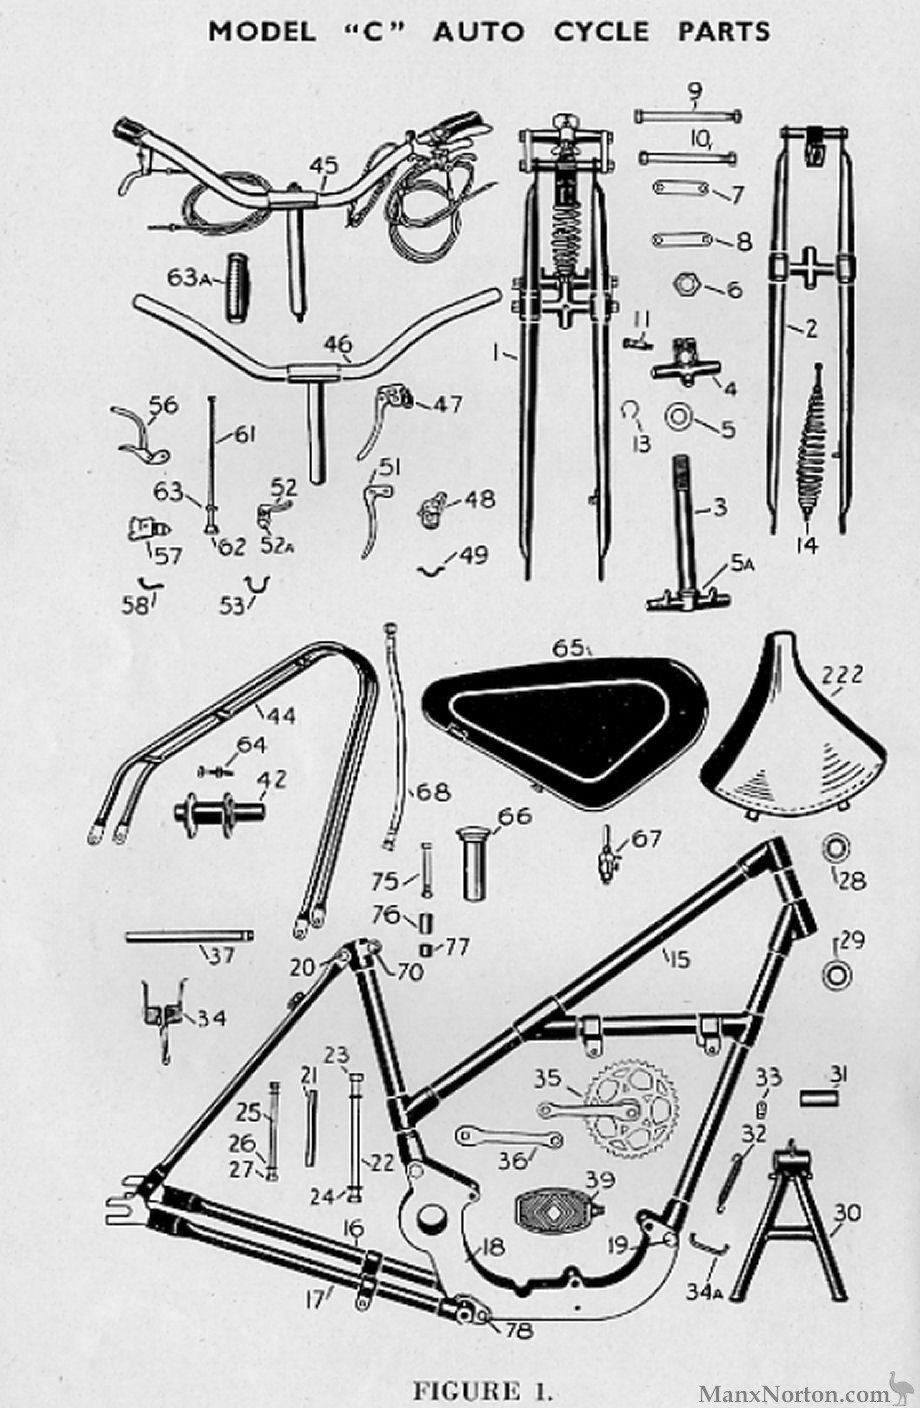 Norman-1951-c-manual-parts.jpg